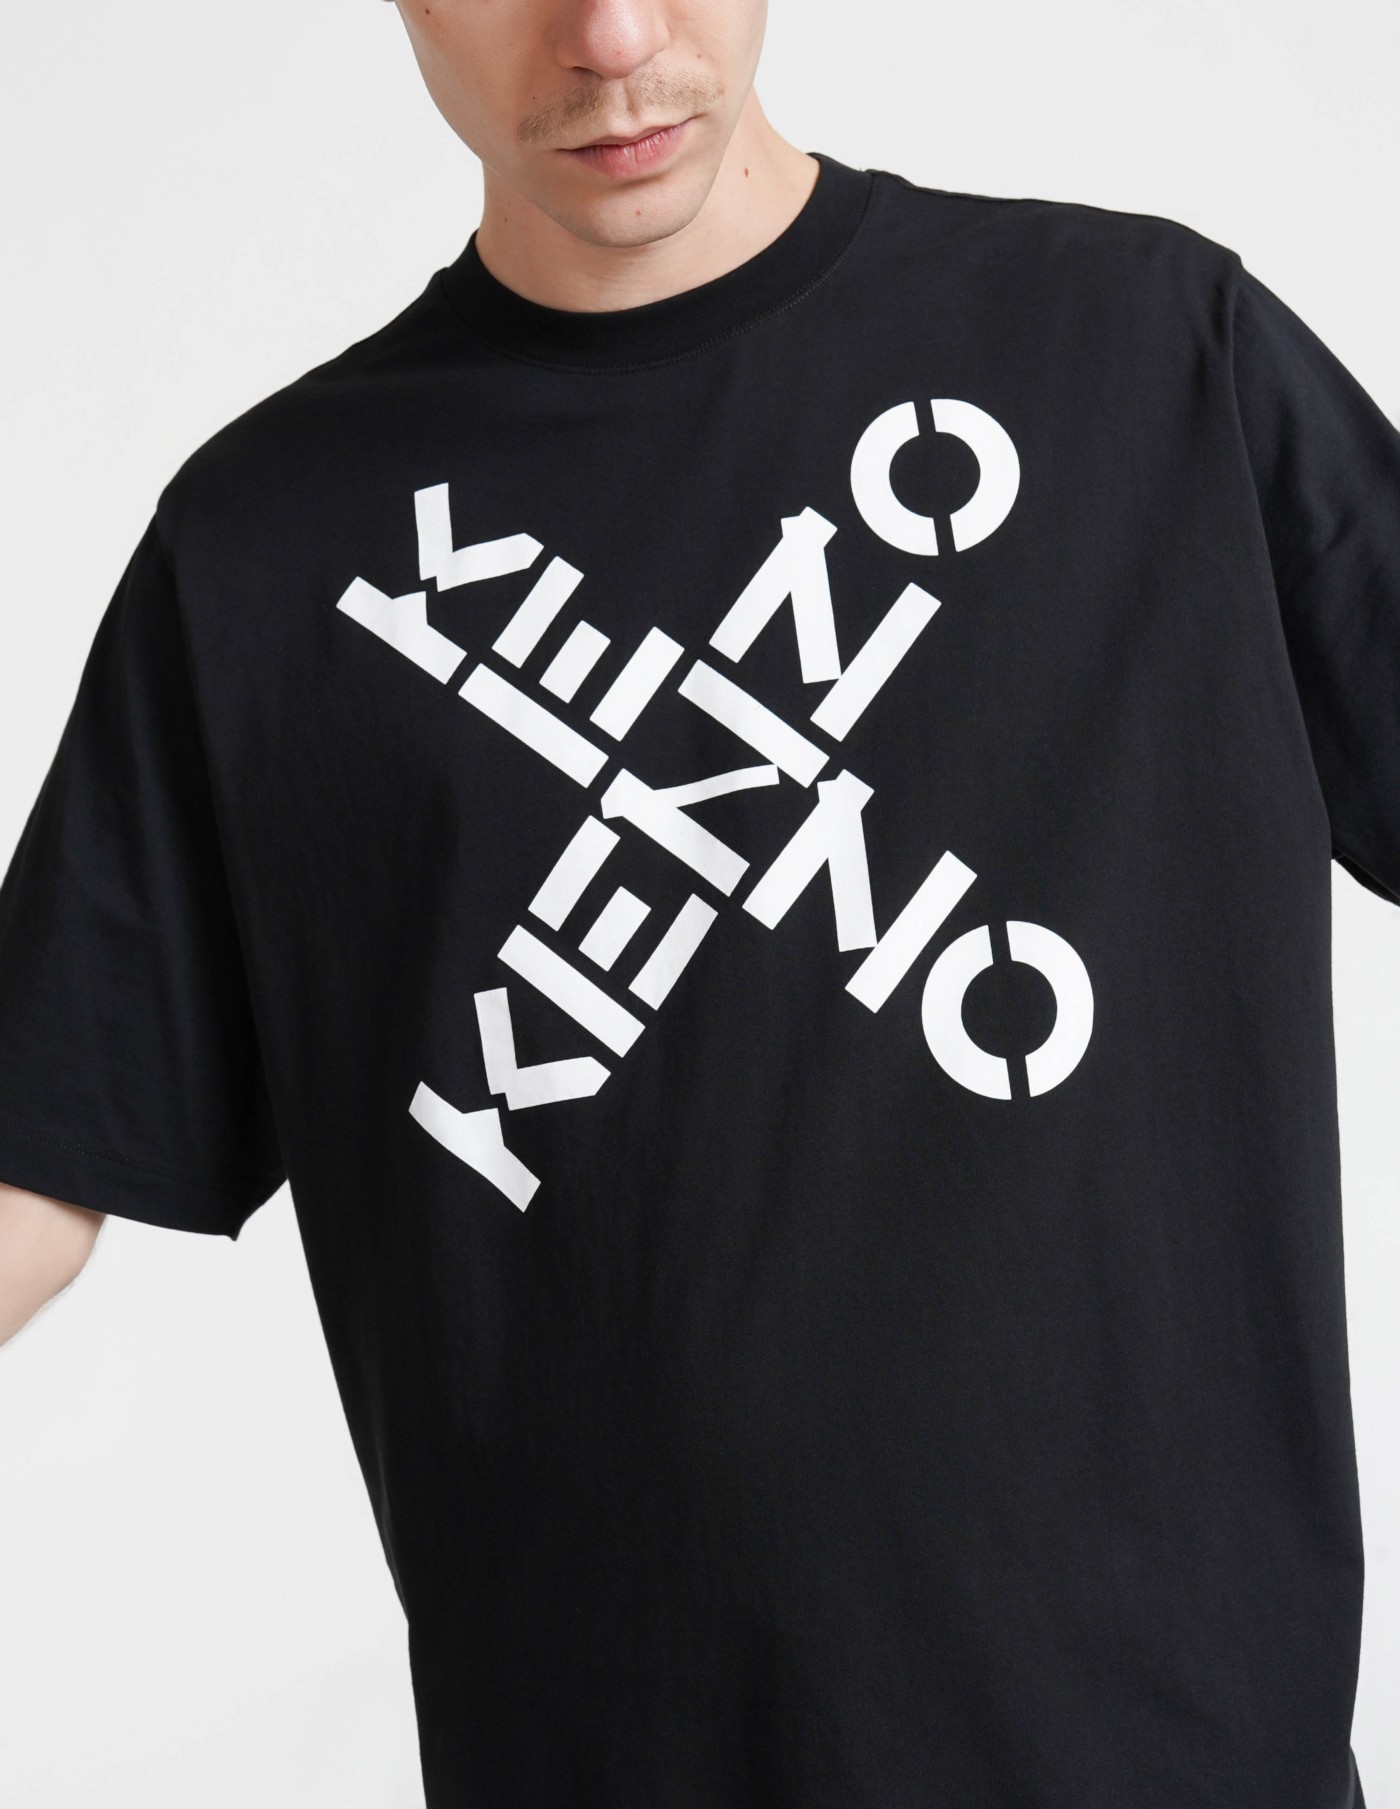 The layout Dollar Masaccio Camiseta Kenzo Negra Hotsell, SAVE 37% - geat.com.br